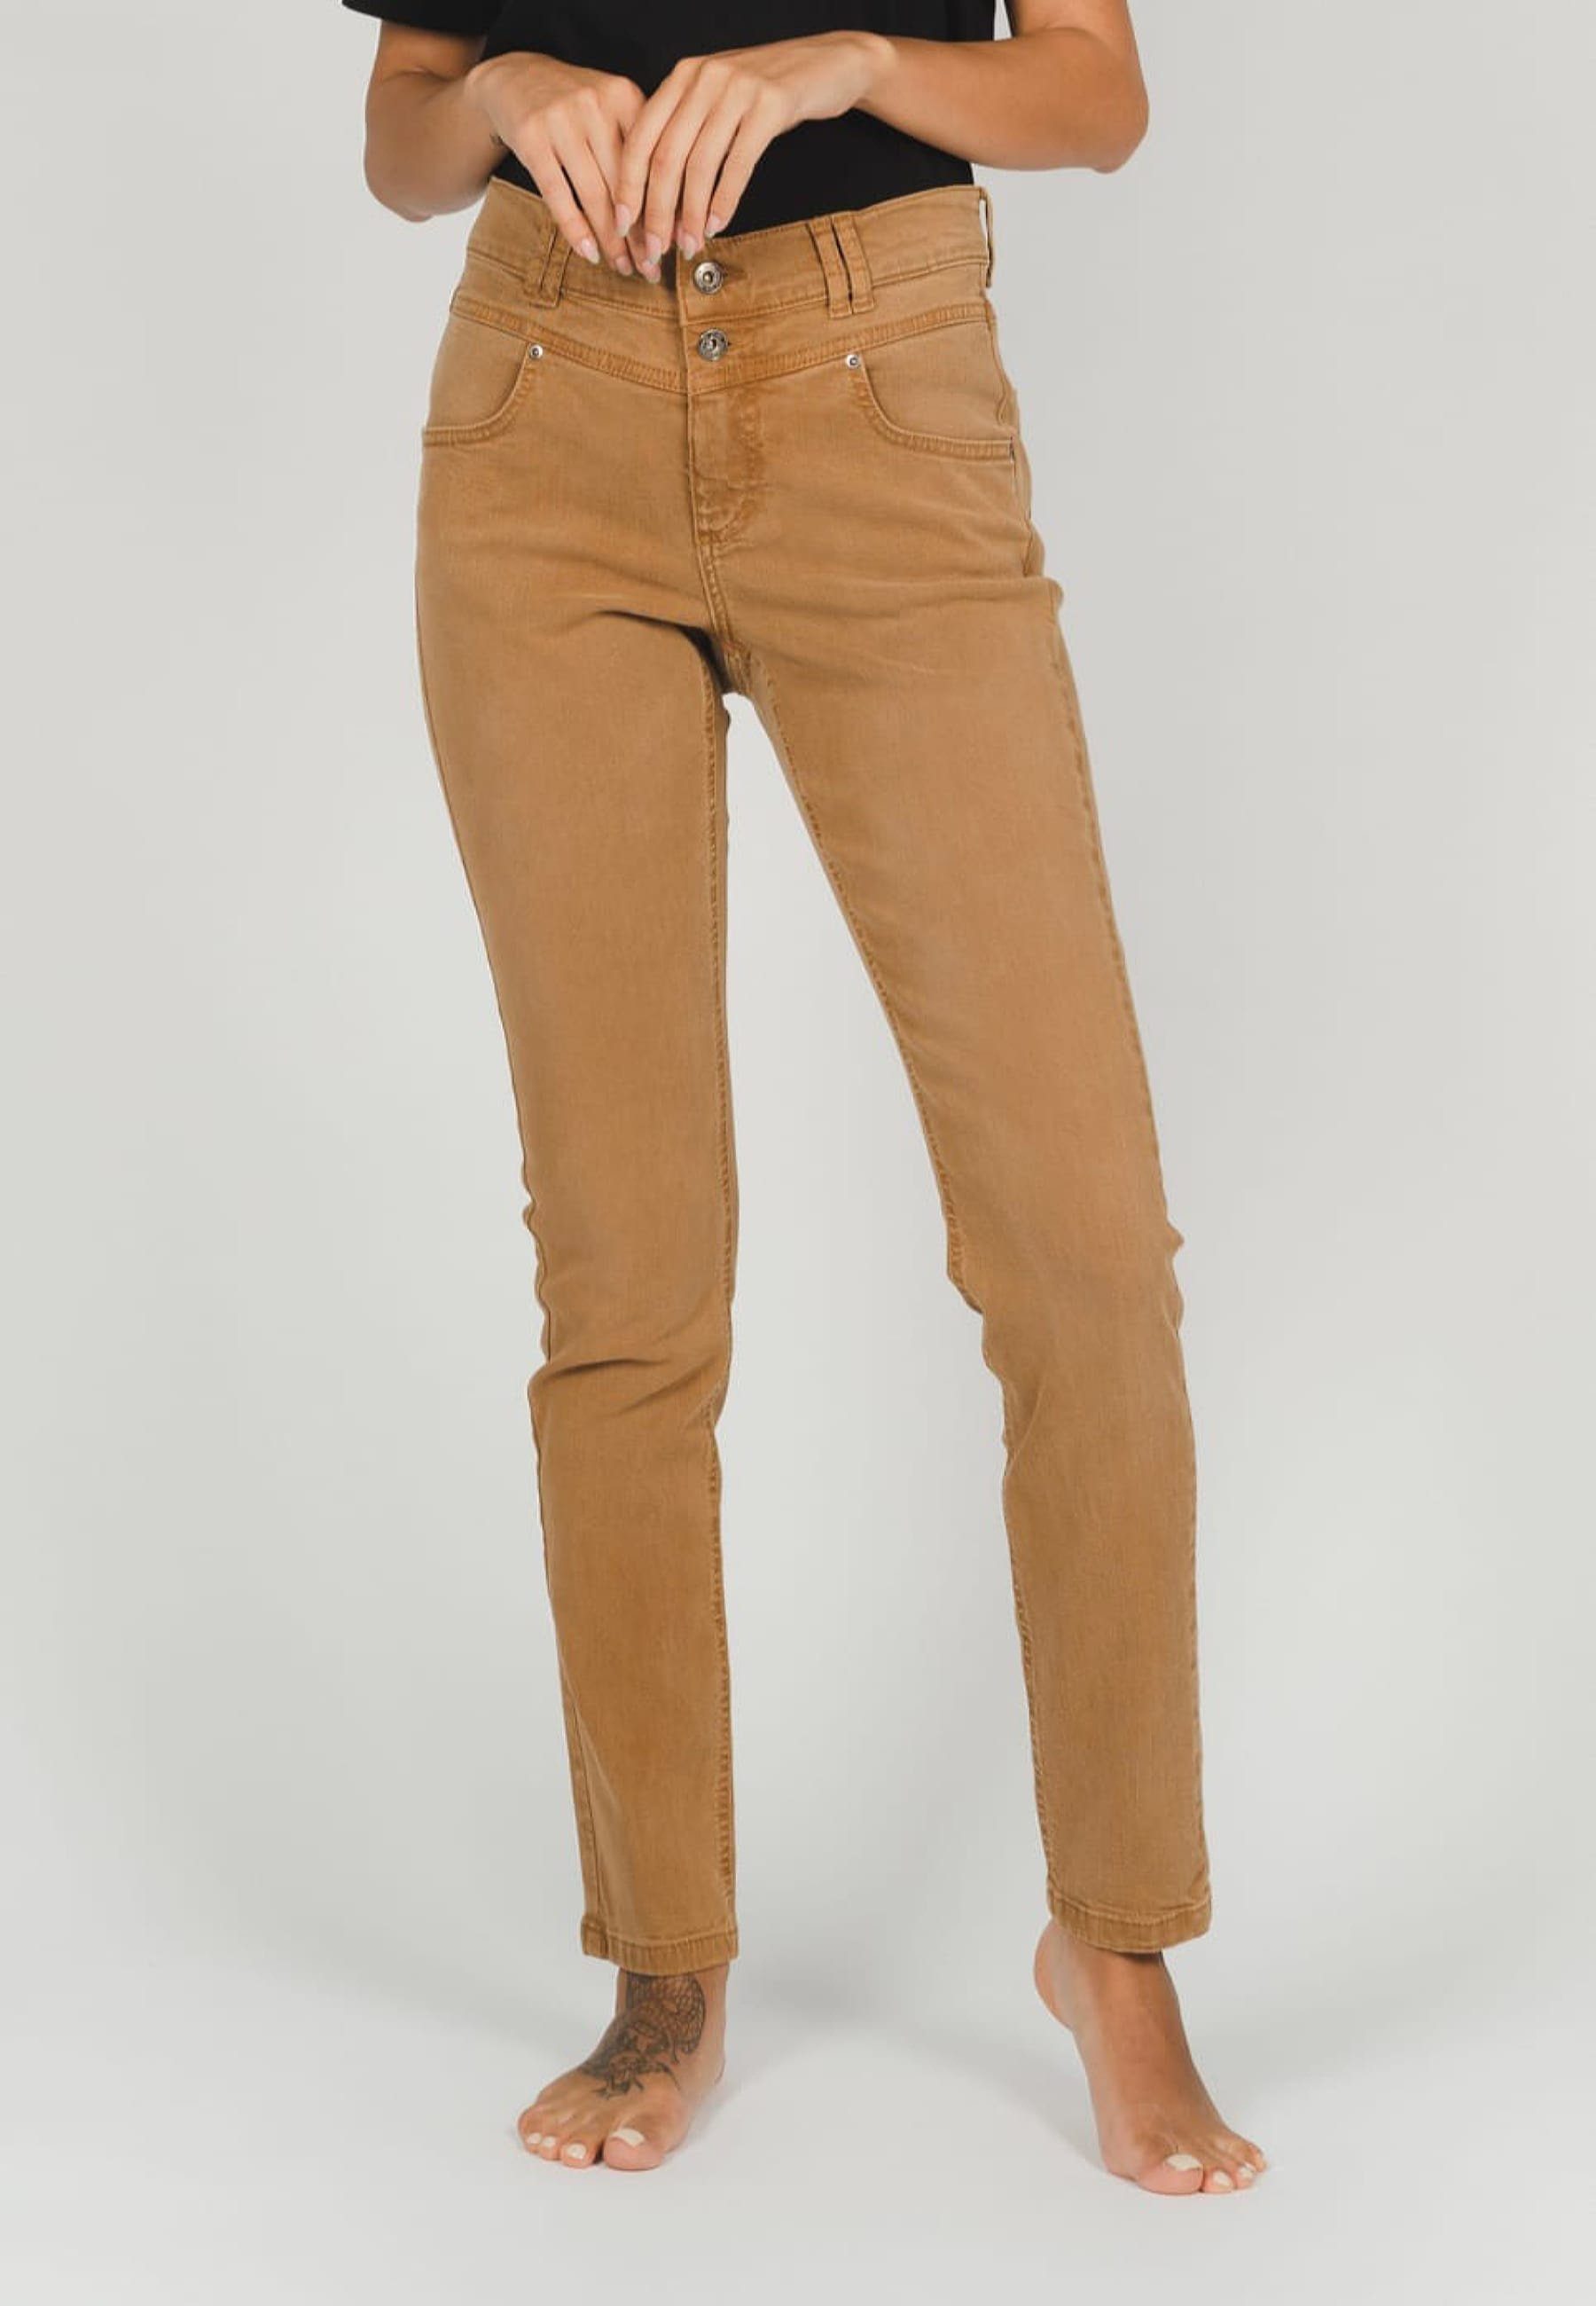 camelfarben mit Button Coloured Skinny Denim ANGELS Slim-fit-Jeans Jeans